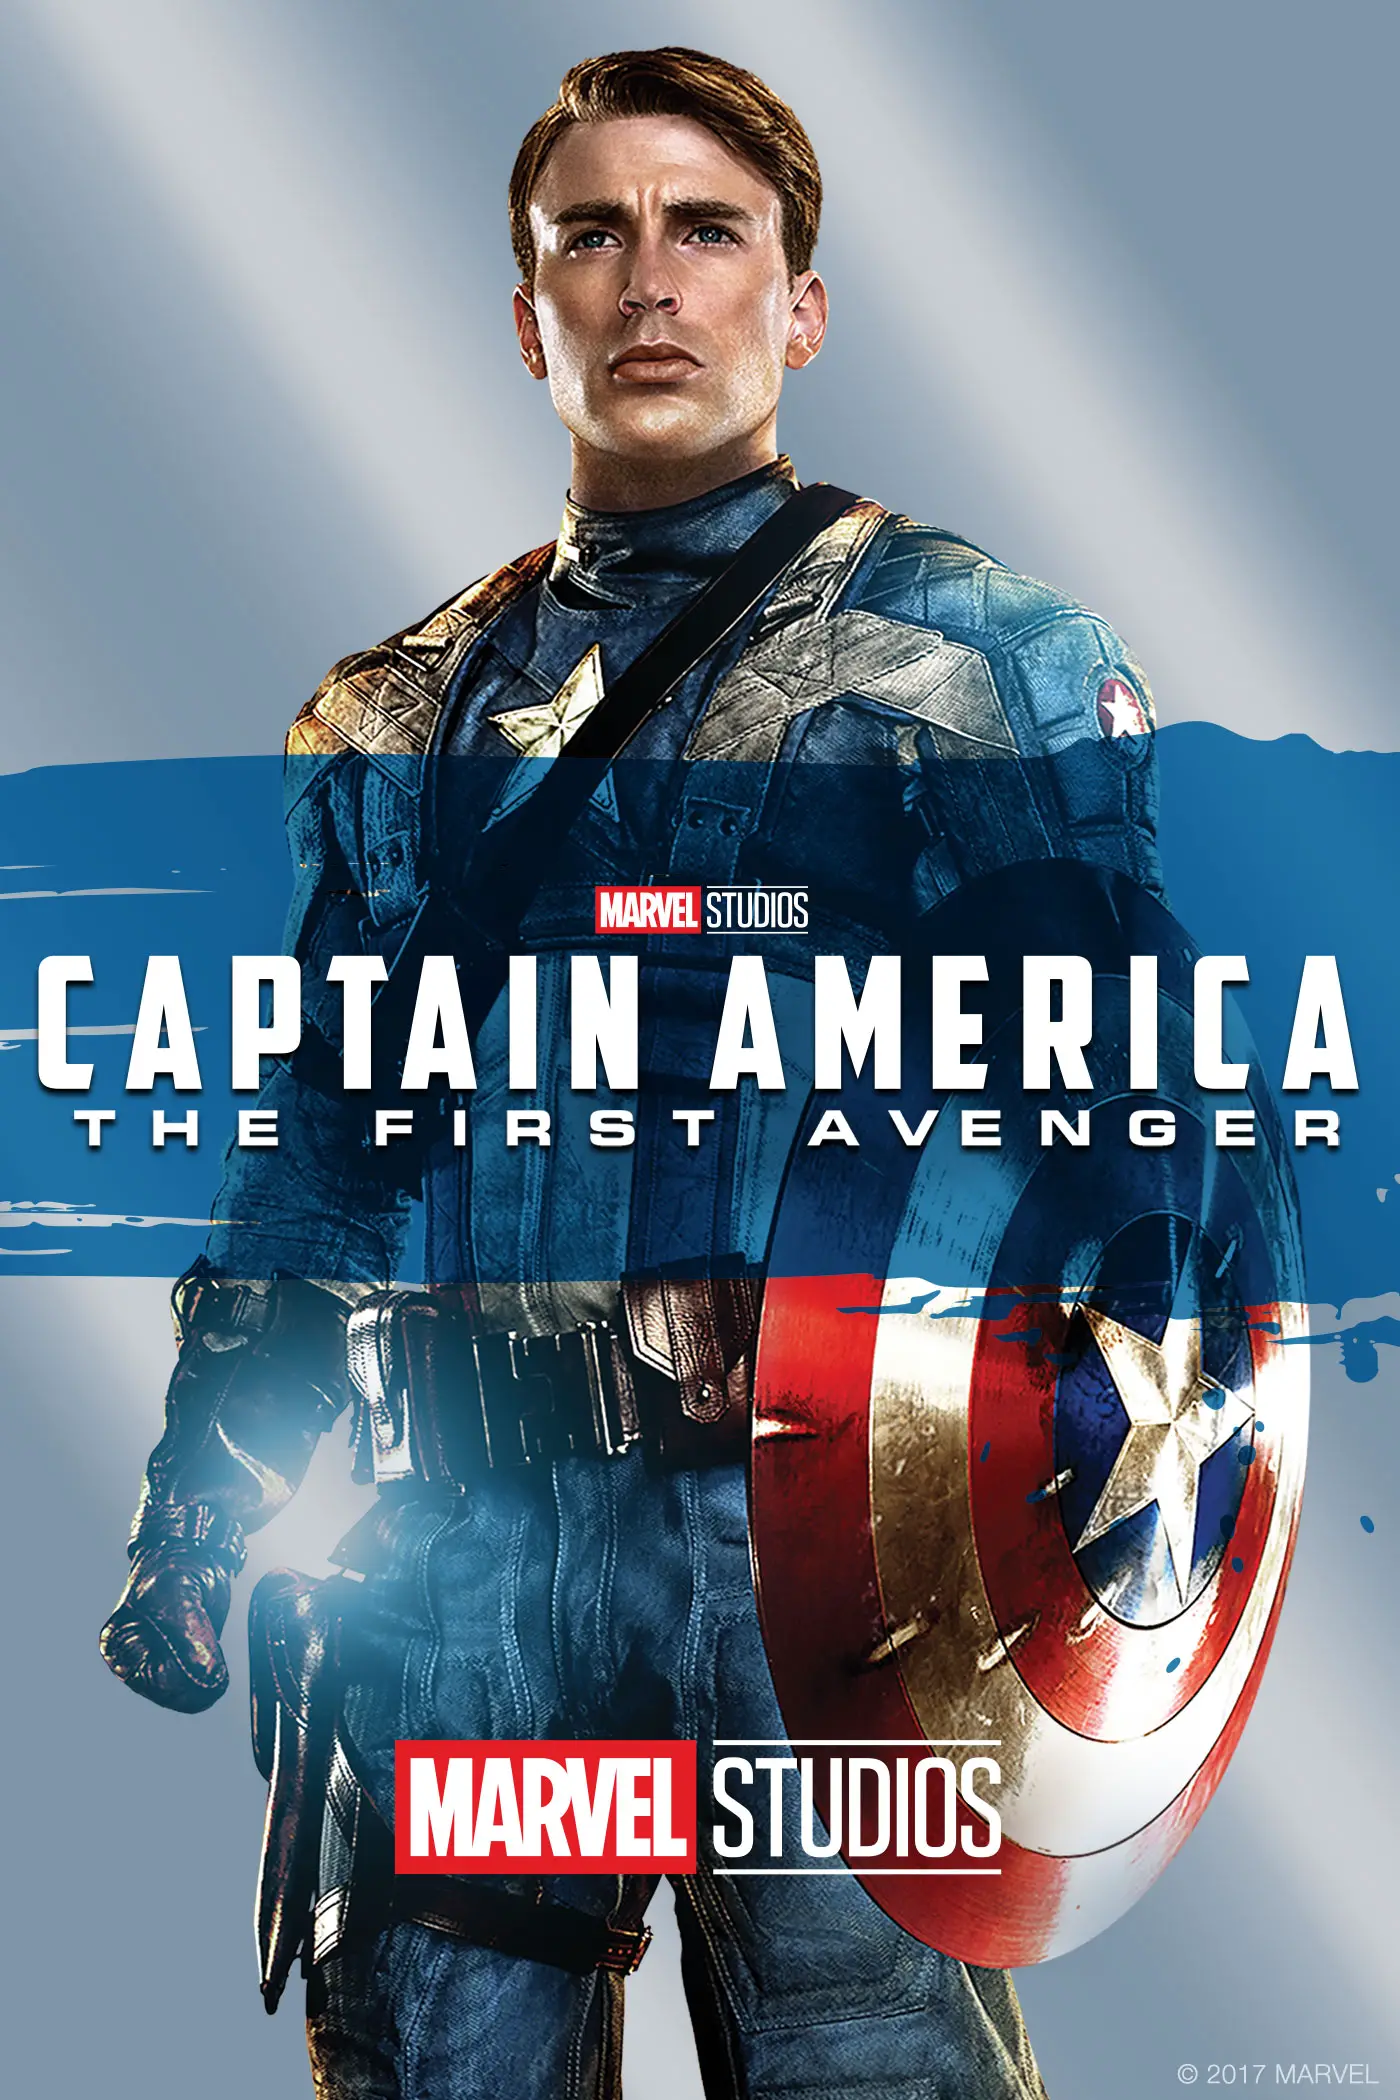 Captain America The First Avenger movie